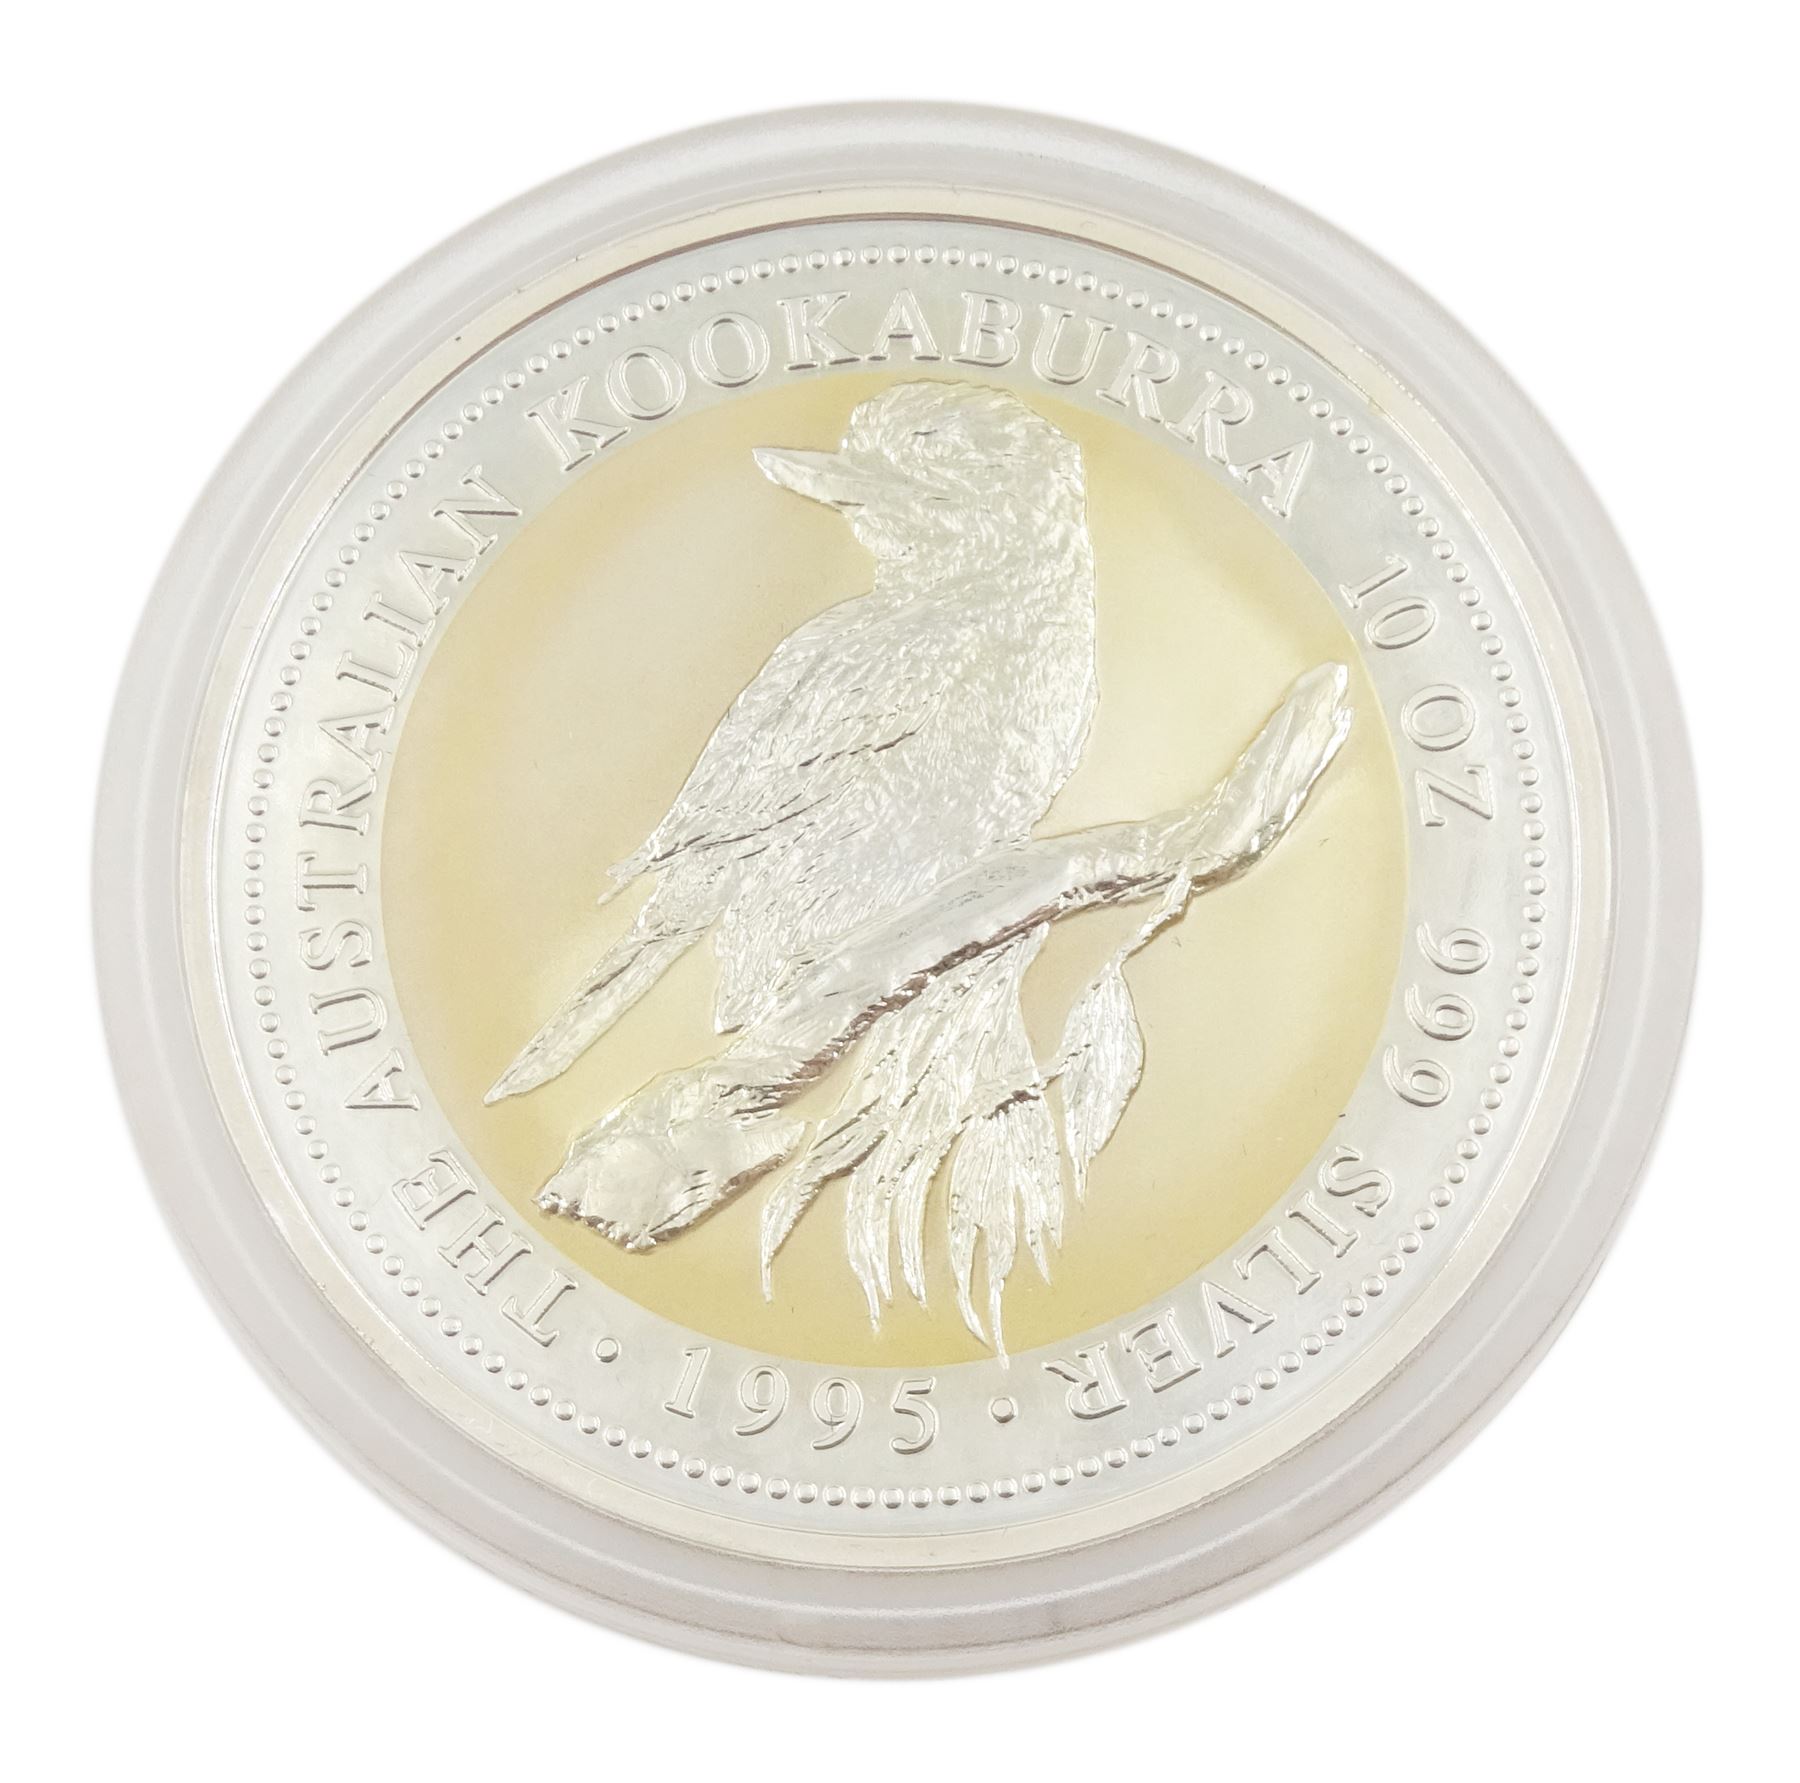 Queen Elizabeth II Australia 1995 ten dollars ten ounce fine silver coin - Image 2 of 3